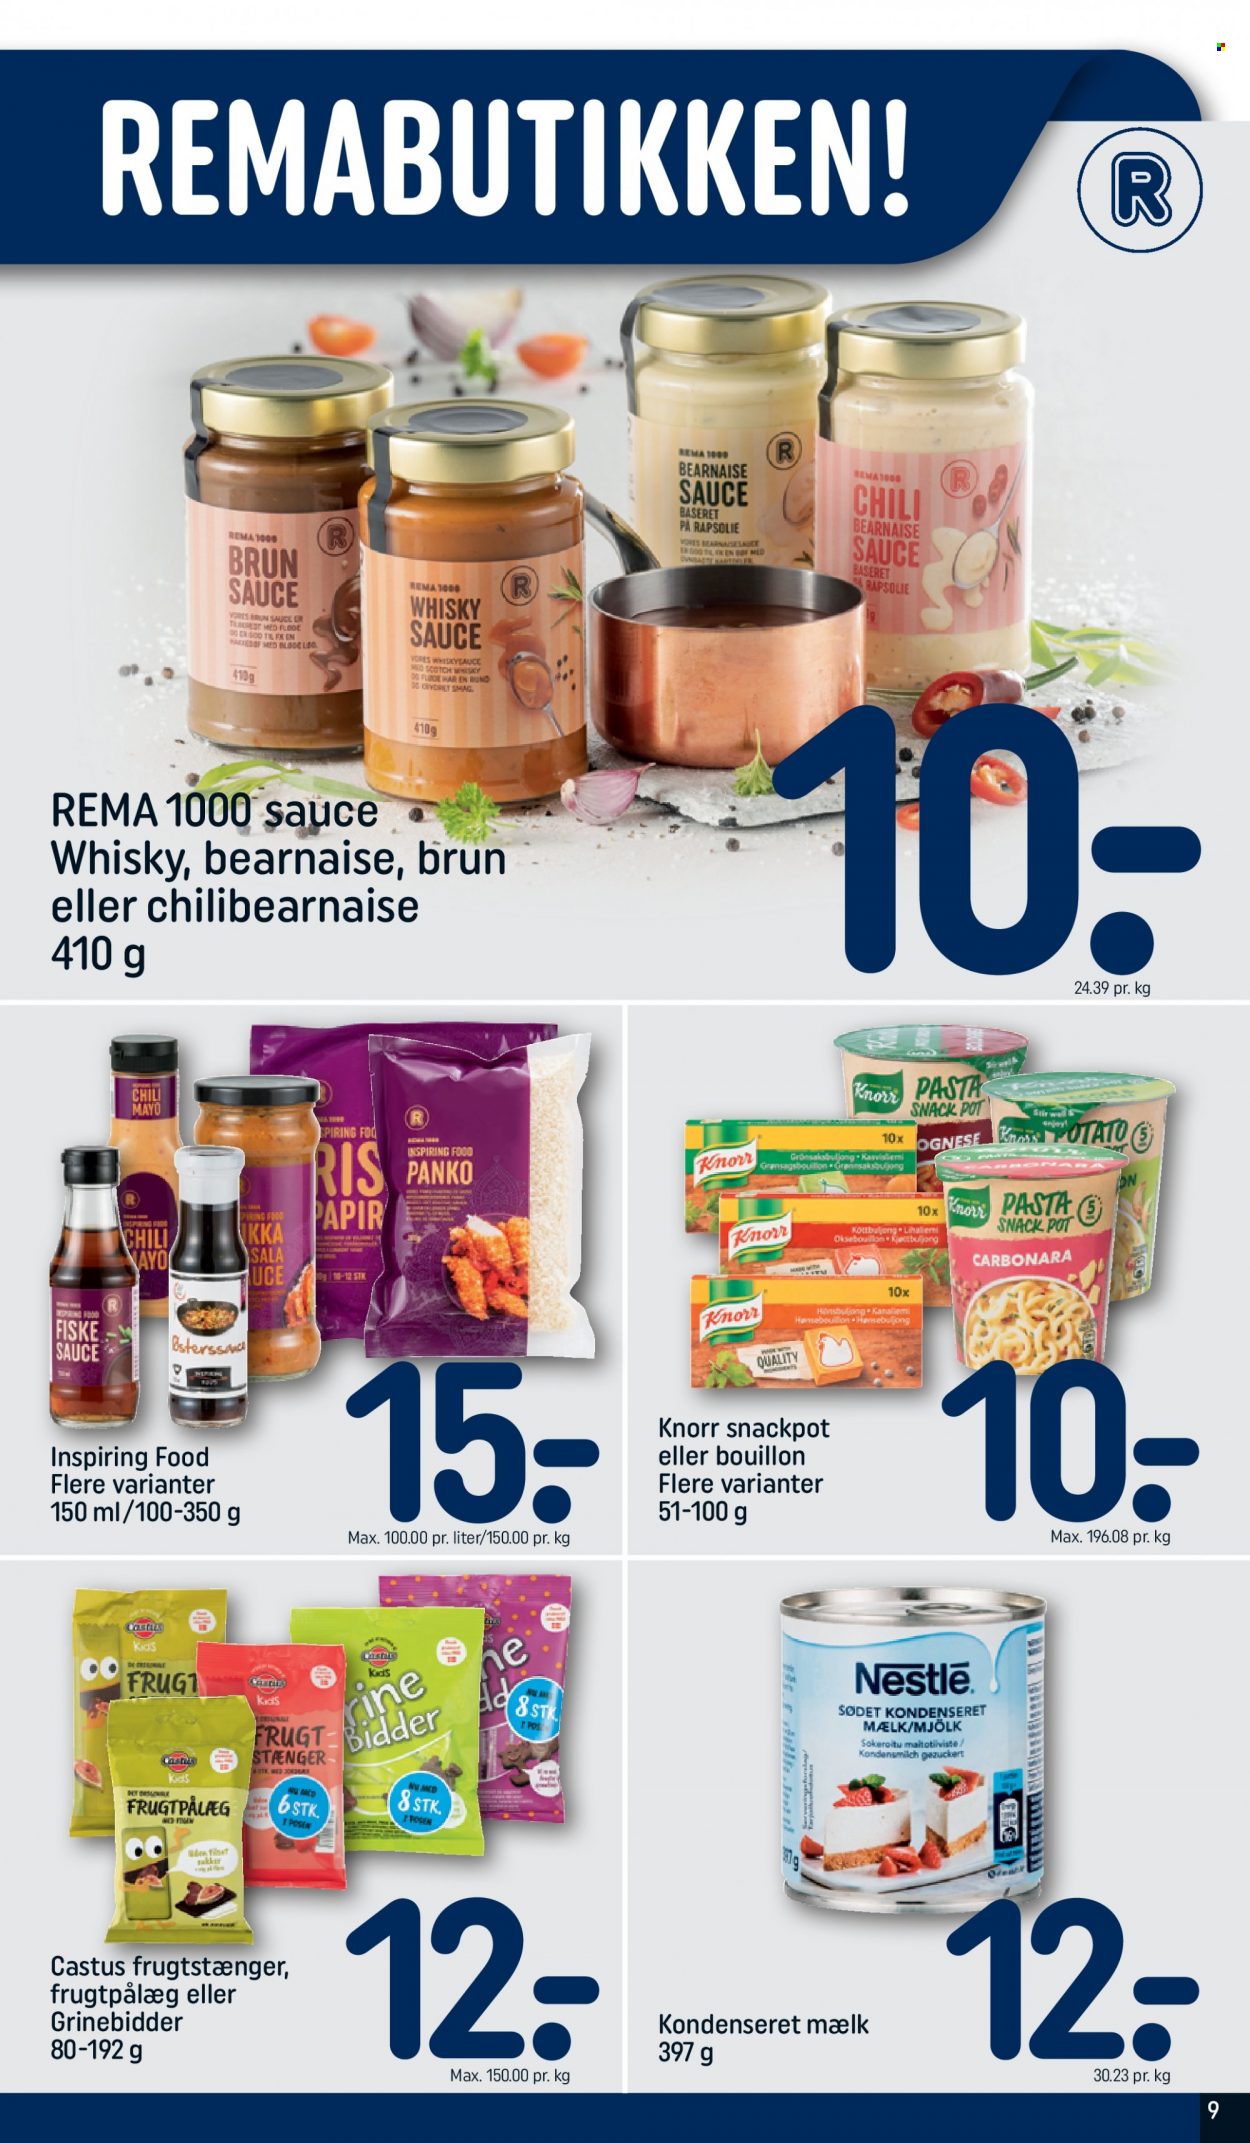 thumbnail - Rema 1000 tilbud  - 22.5.2022 - 28.5.2022 - tilbudsprodukter - Knorr, Snackpot, Nestlé, mælk, Castus, bouillon, pasta, ris, sauce, whisky. Side 9.